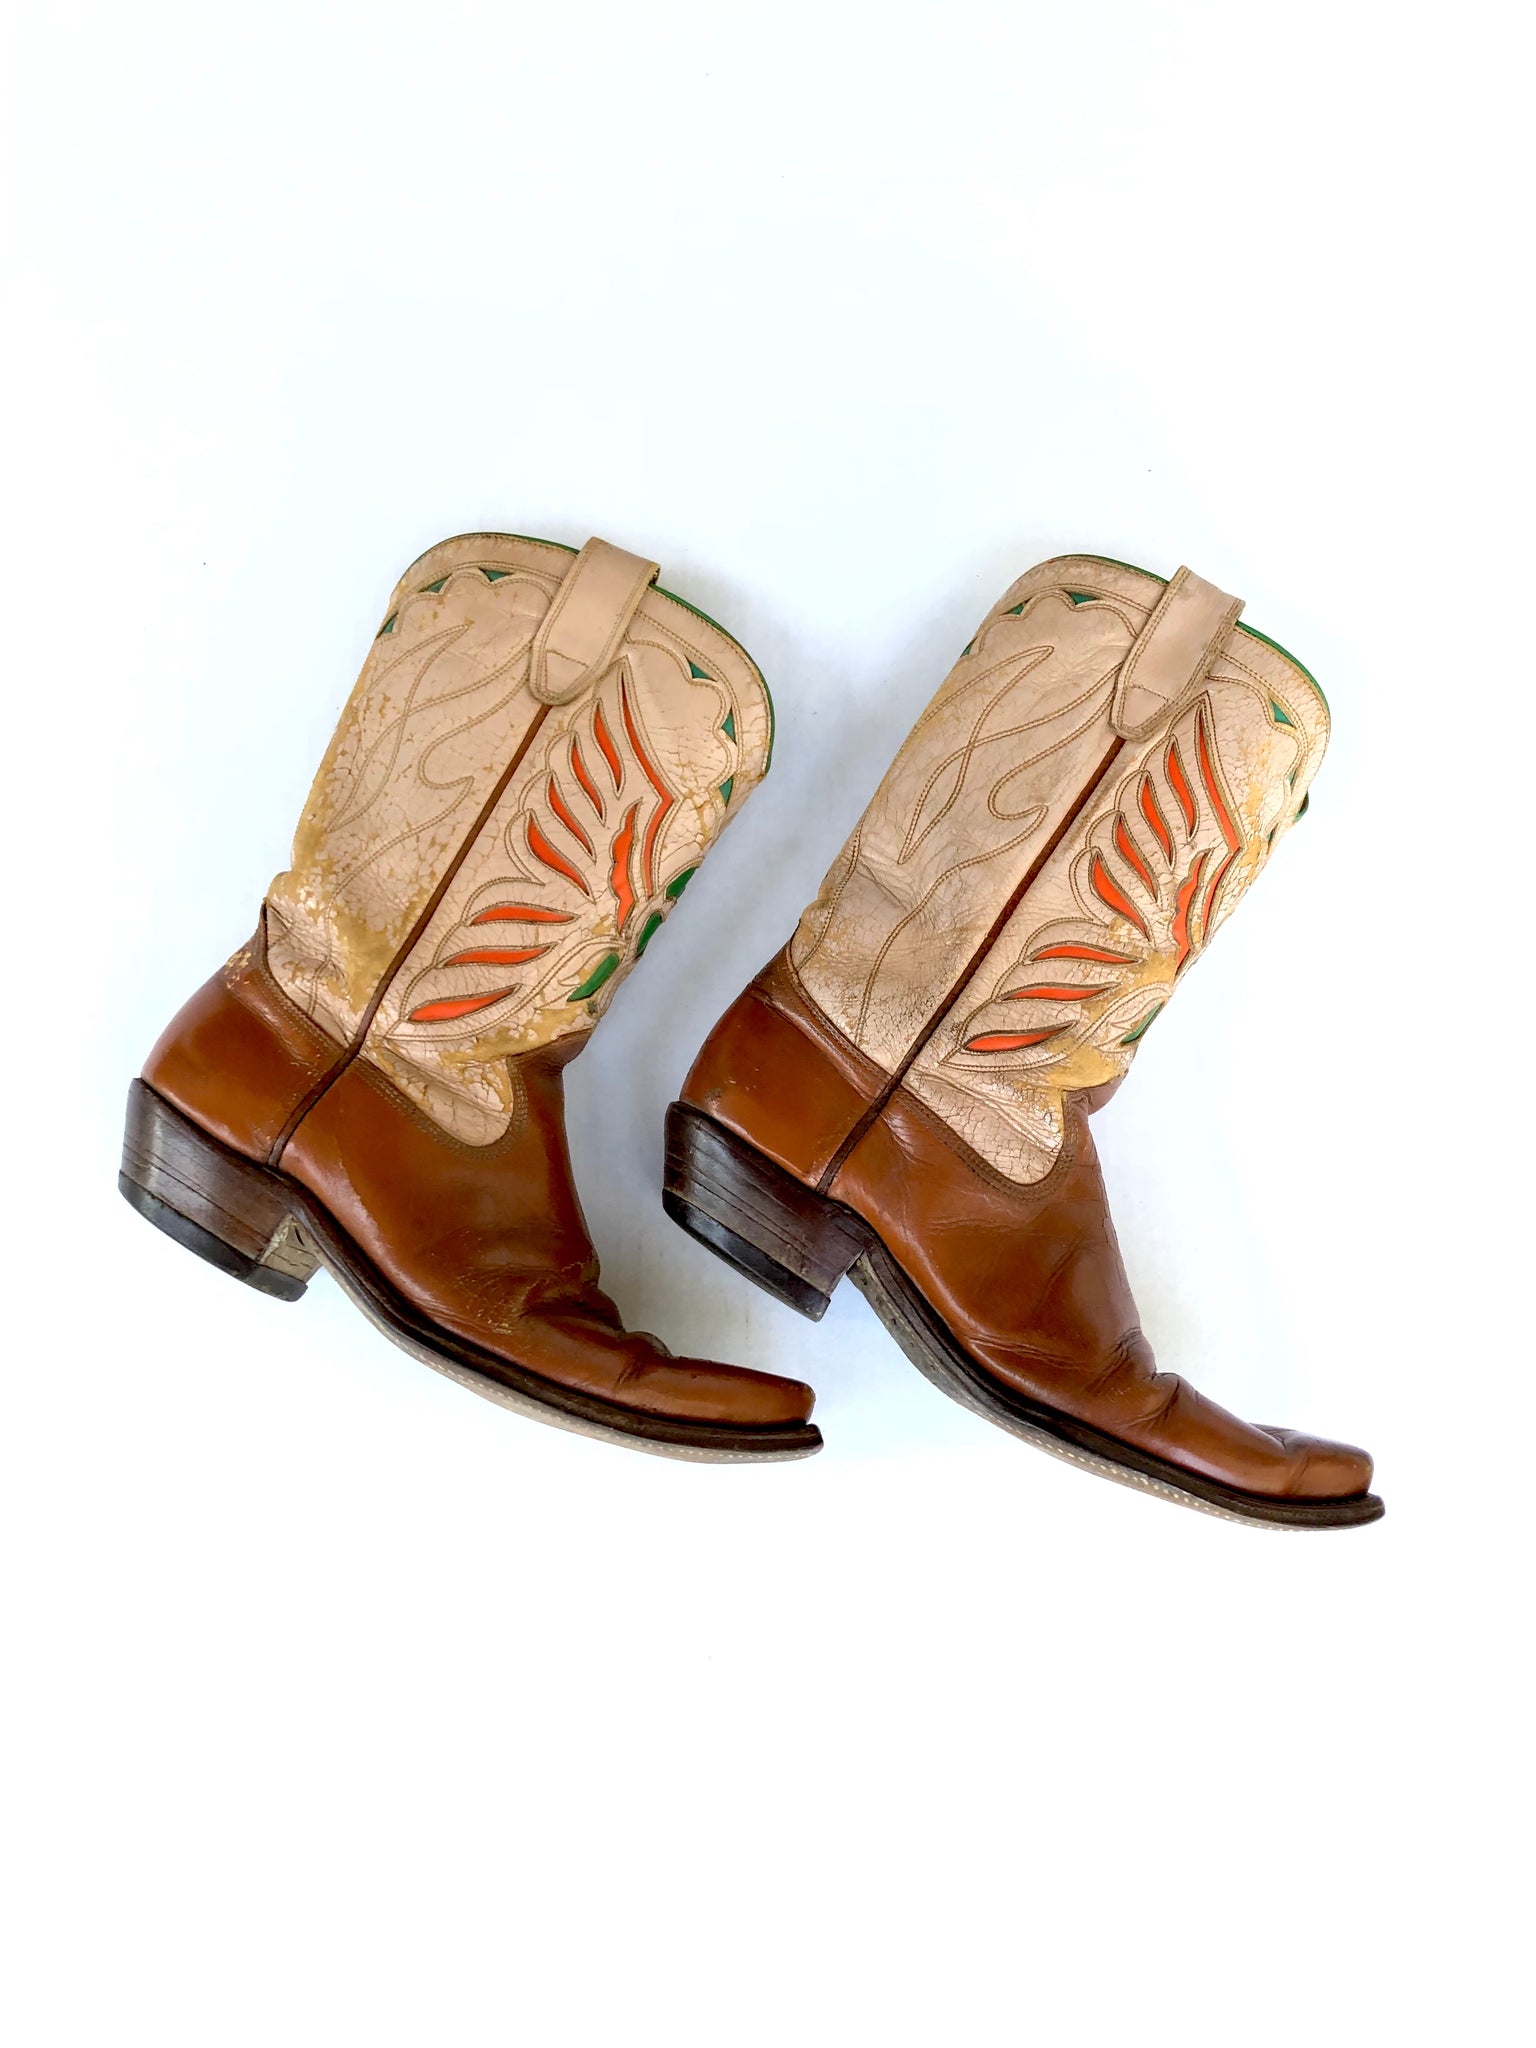 VINTAGE: 1950s Fire Bird Leather Cowboy Boots